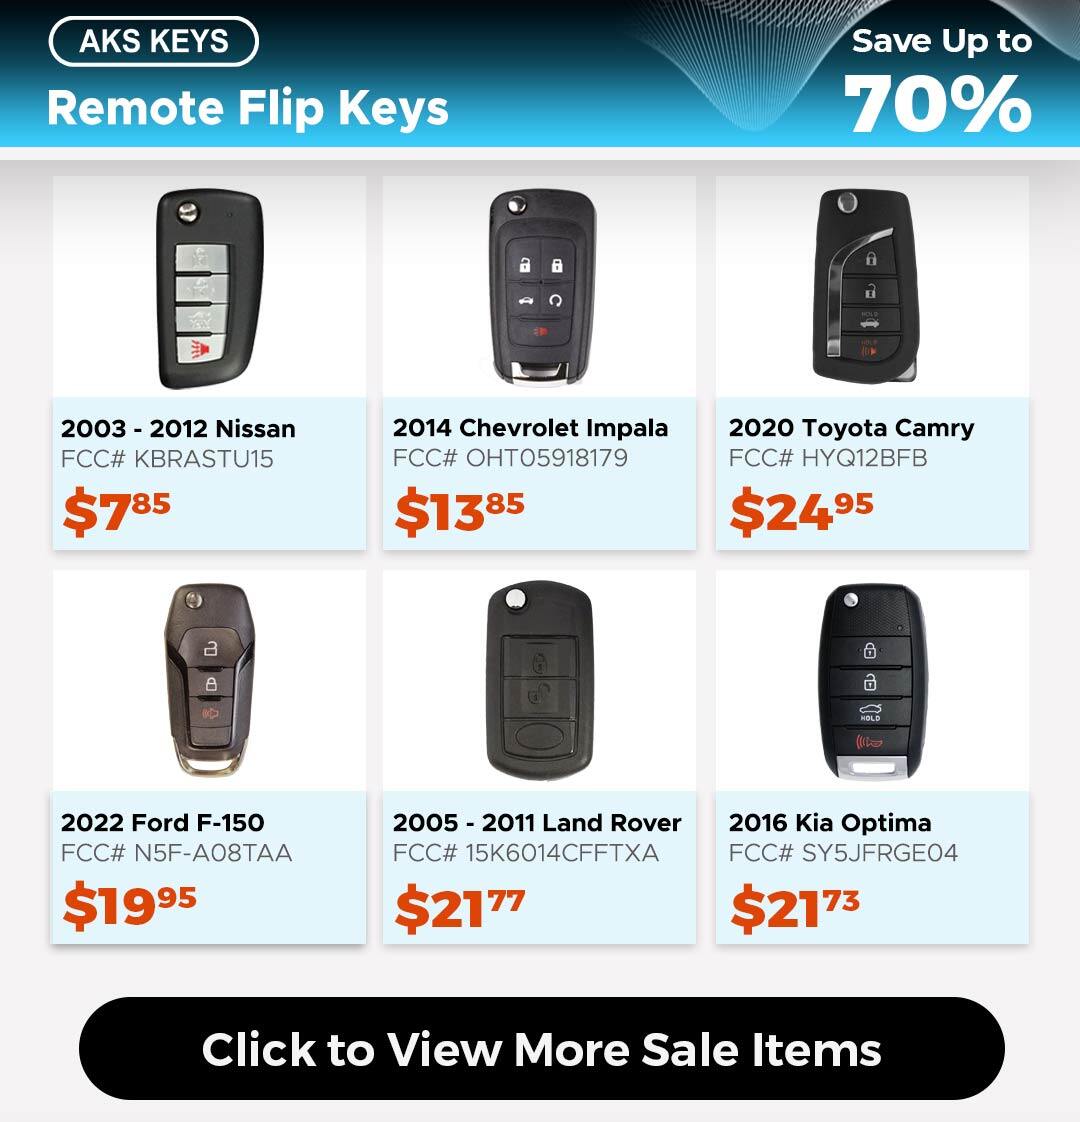 Remote Flip Keys